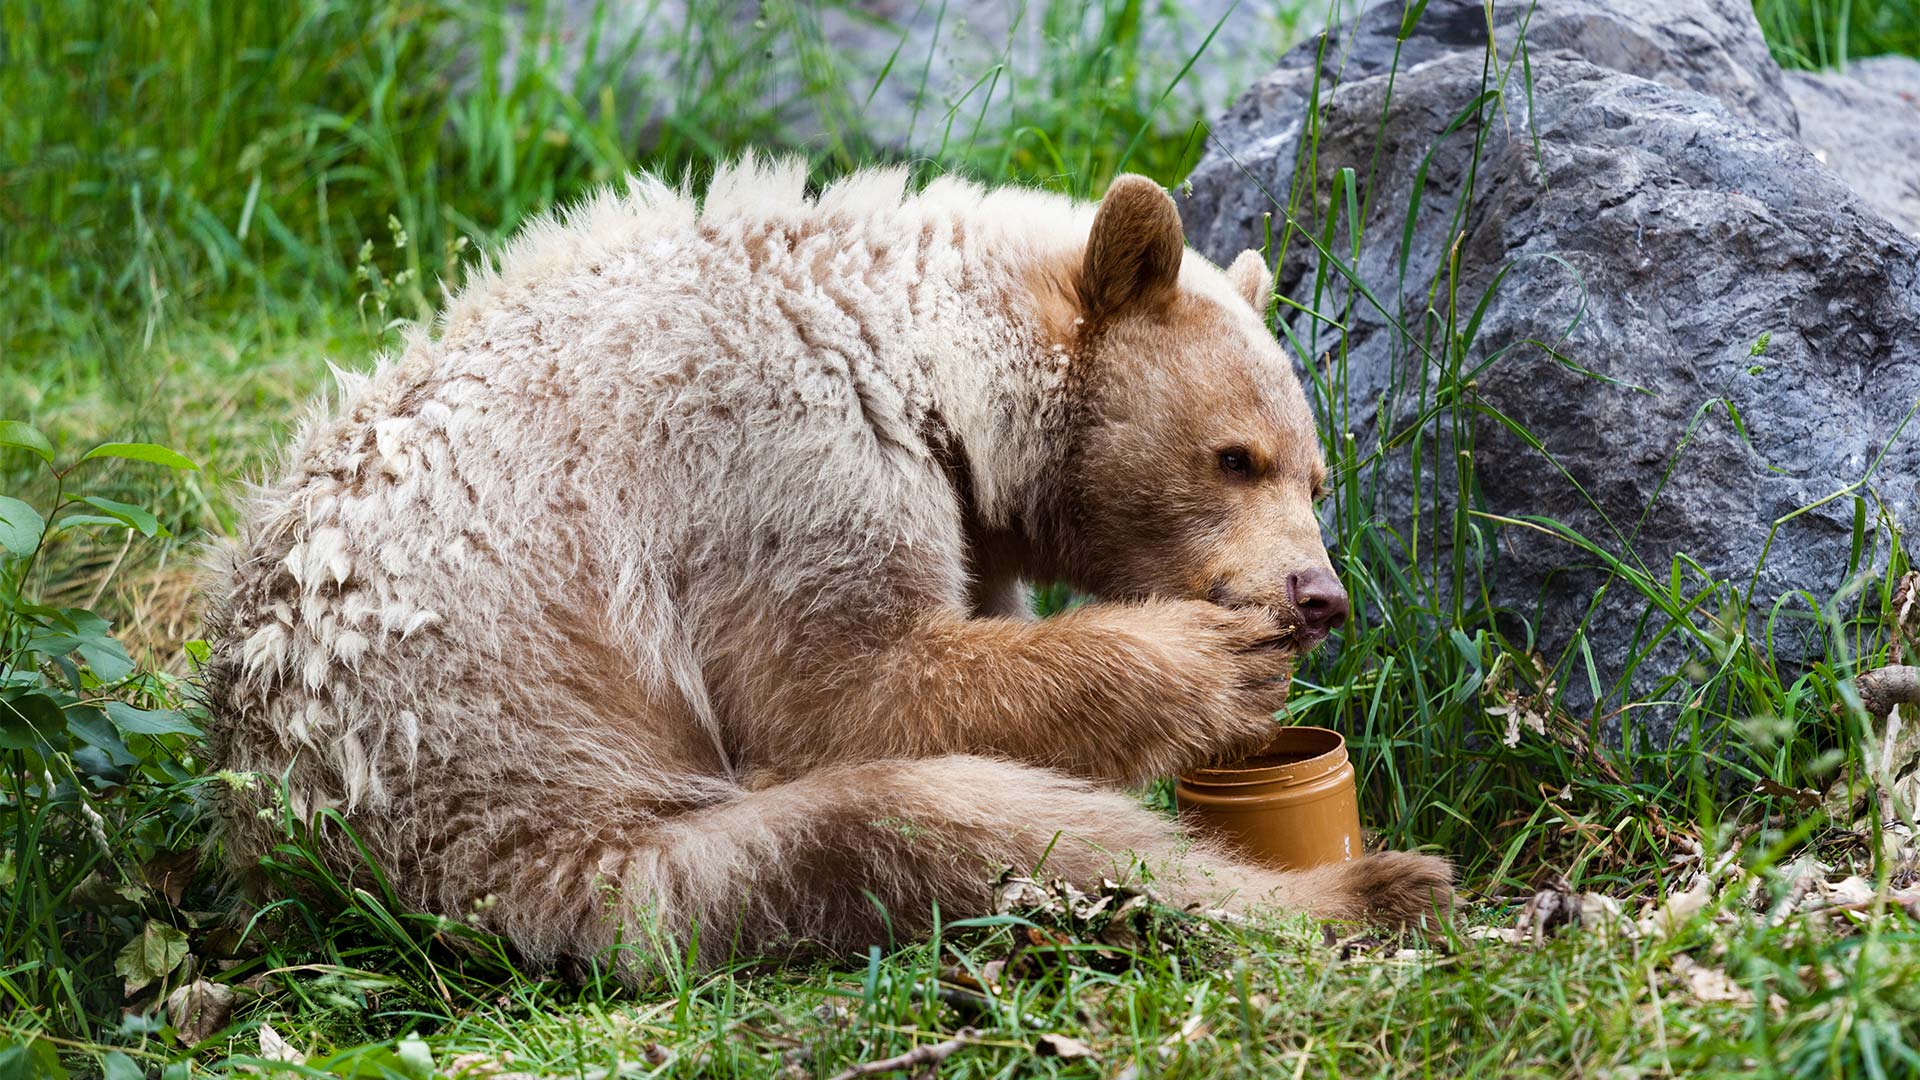 Bear sitting and eating honey